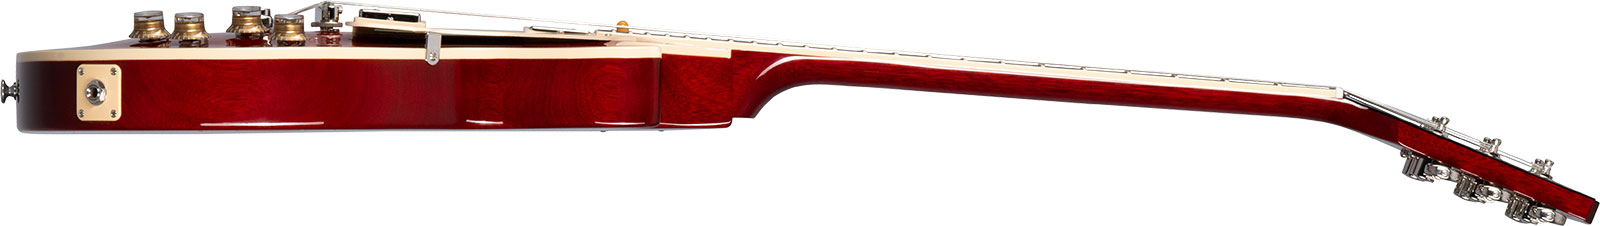 Gibson Les Paul Standard 60s Figured Original 2h Ht Rw - 60s Cherry - Single cut electric guitar - Variation 2